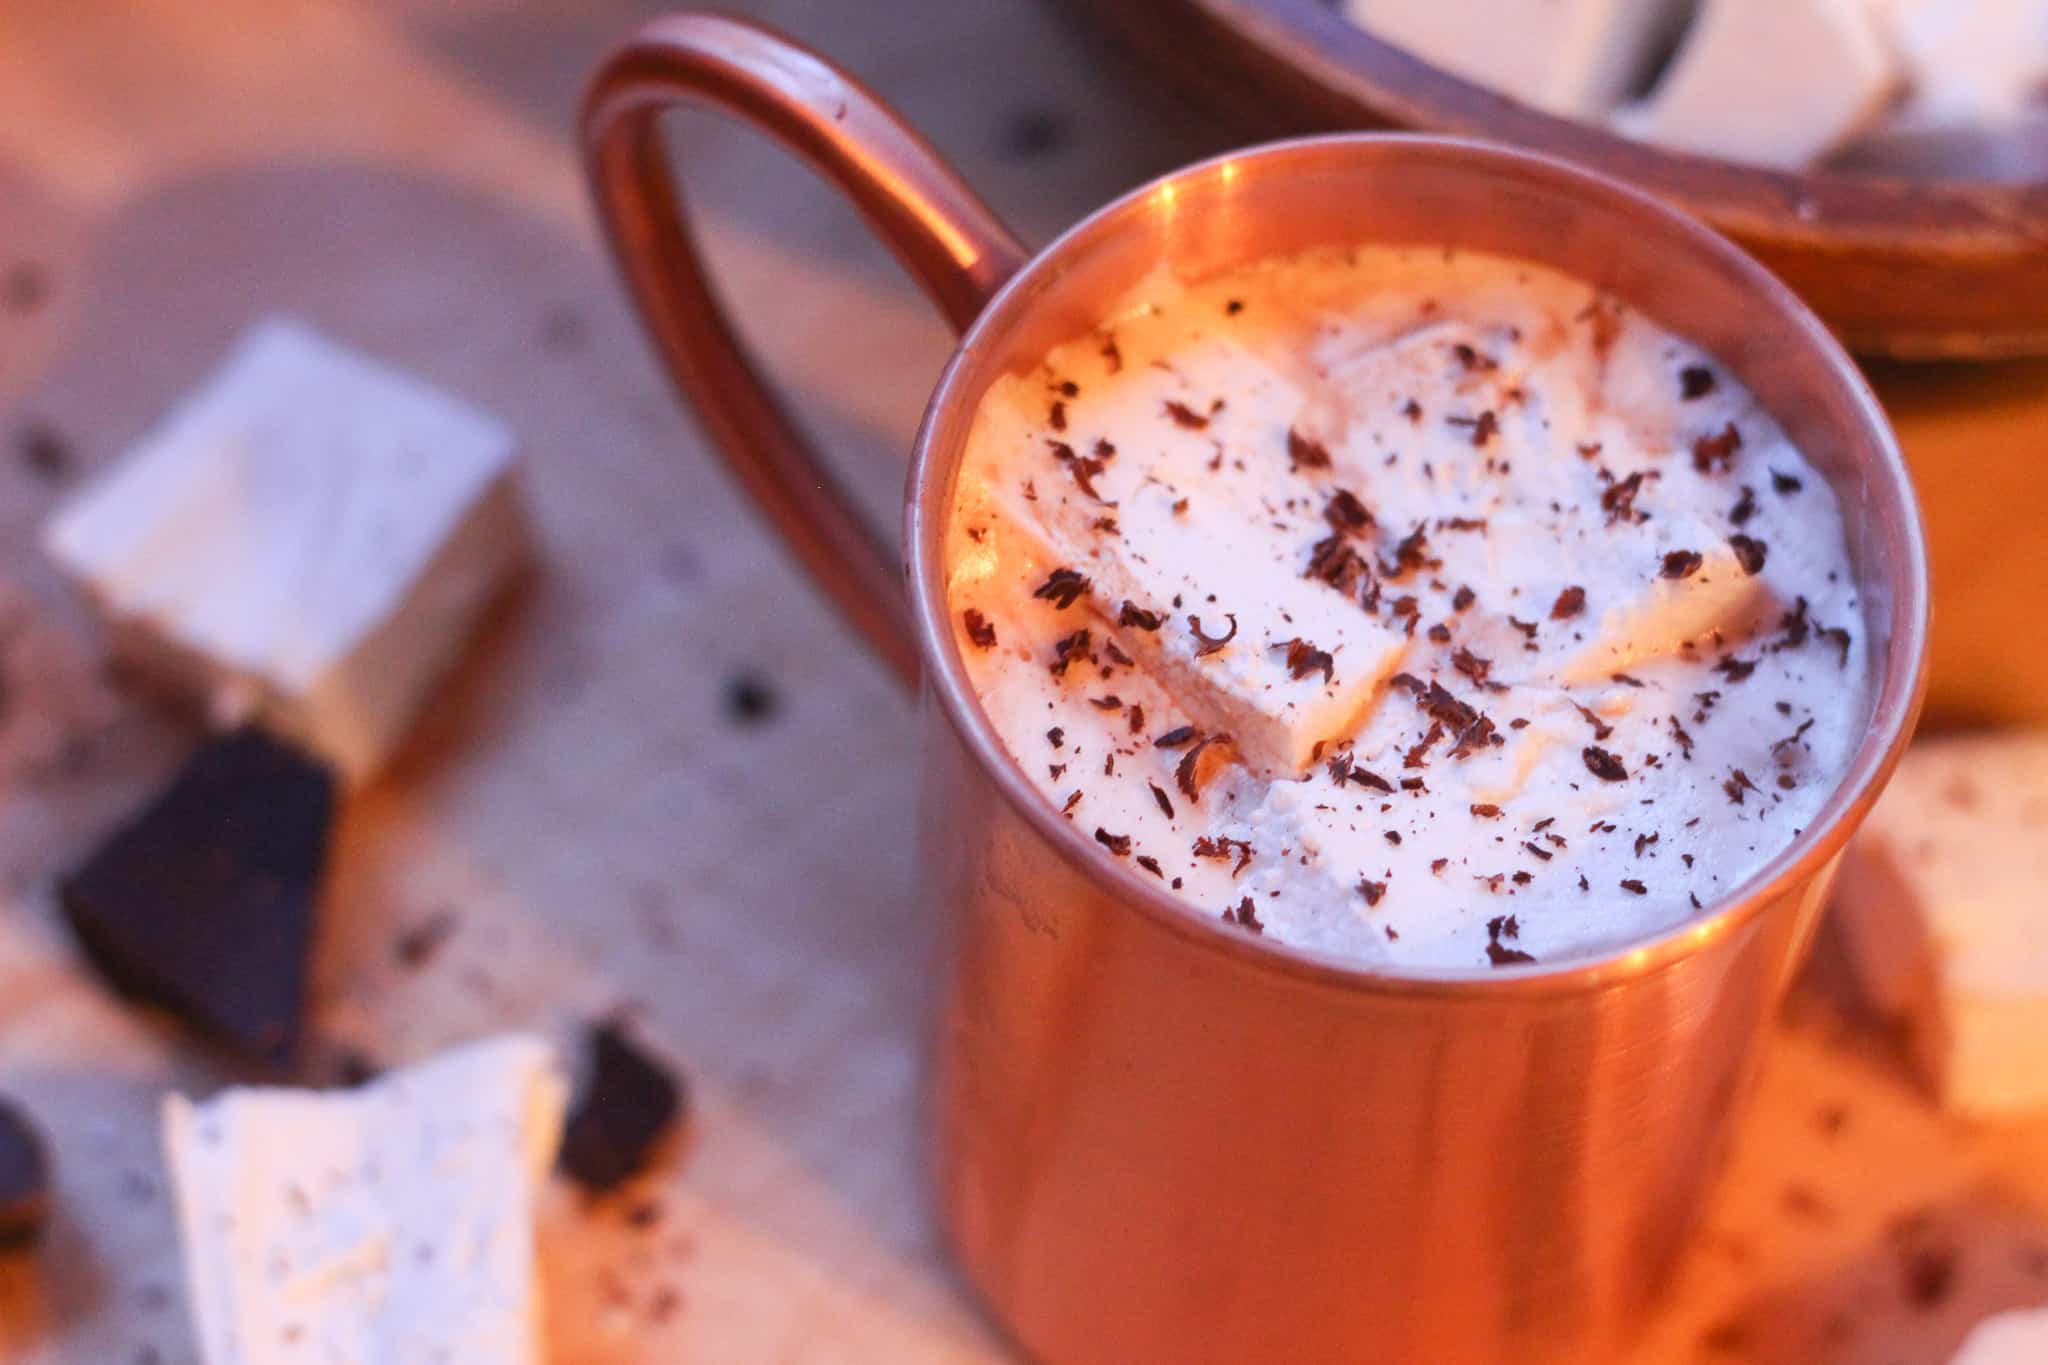 Homemade Hot Chocolate on the Wood Stove